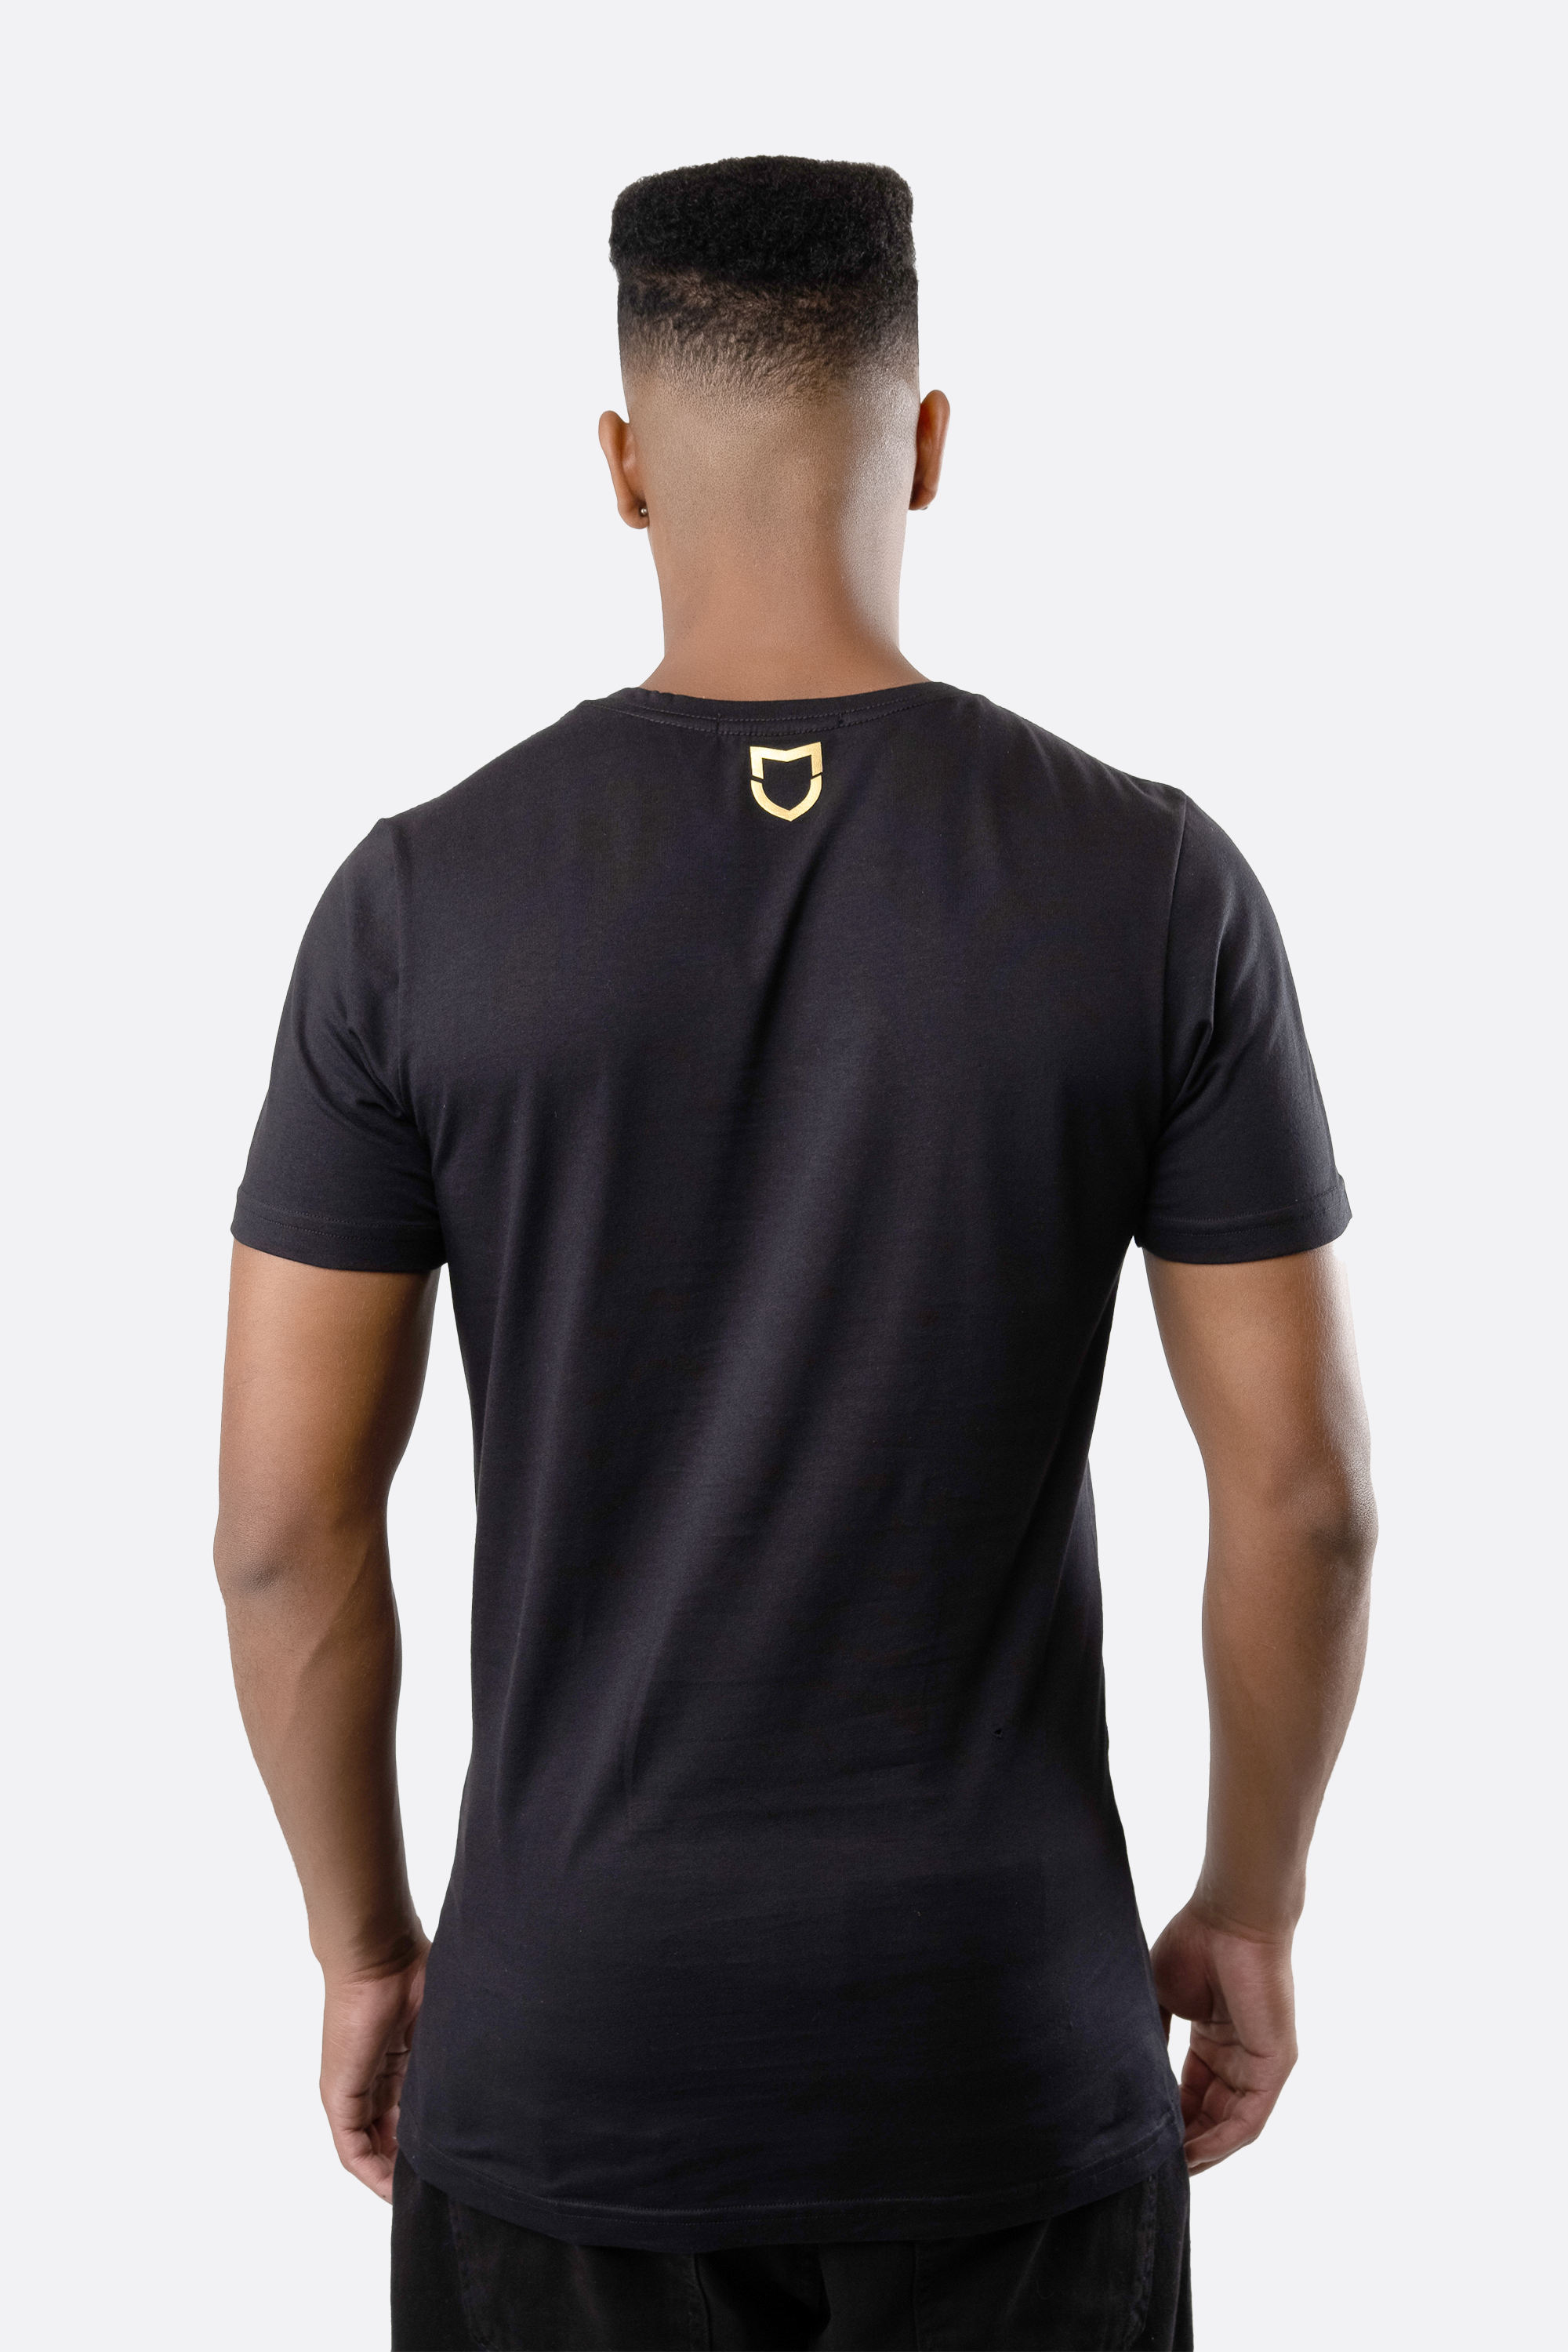 Camiseta Emive Long Pentagram Preto